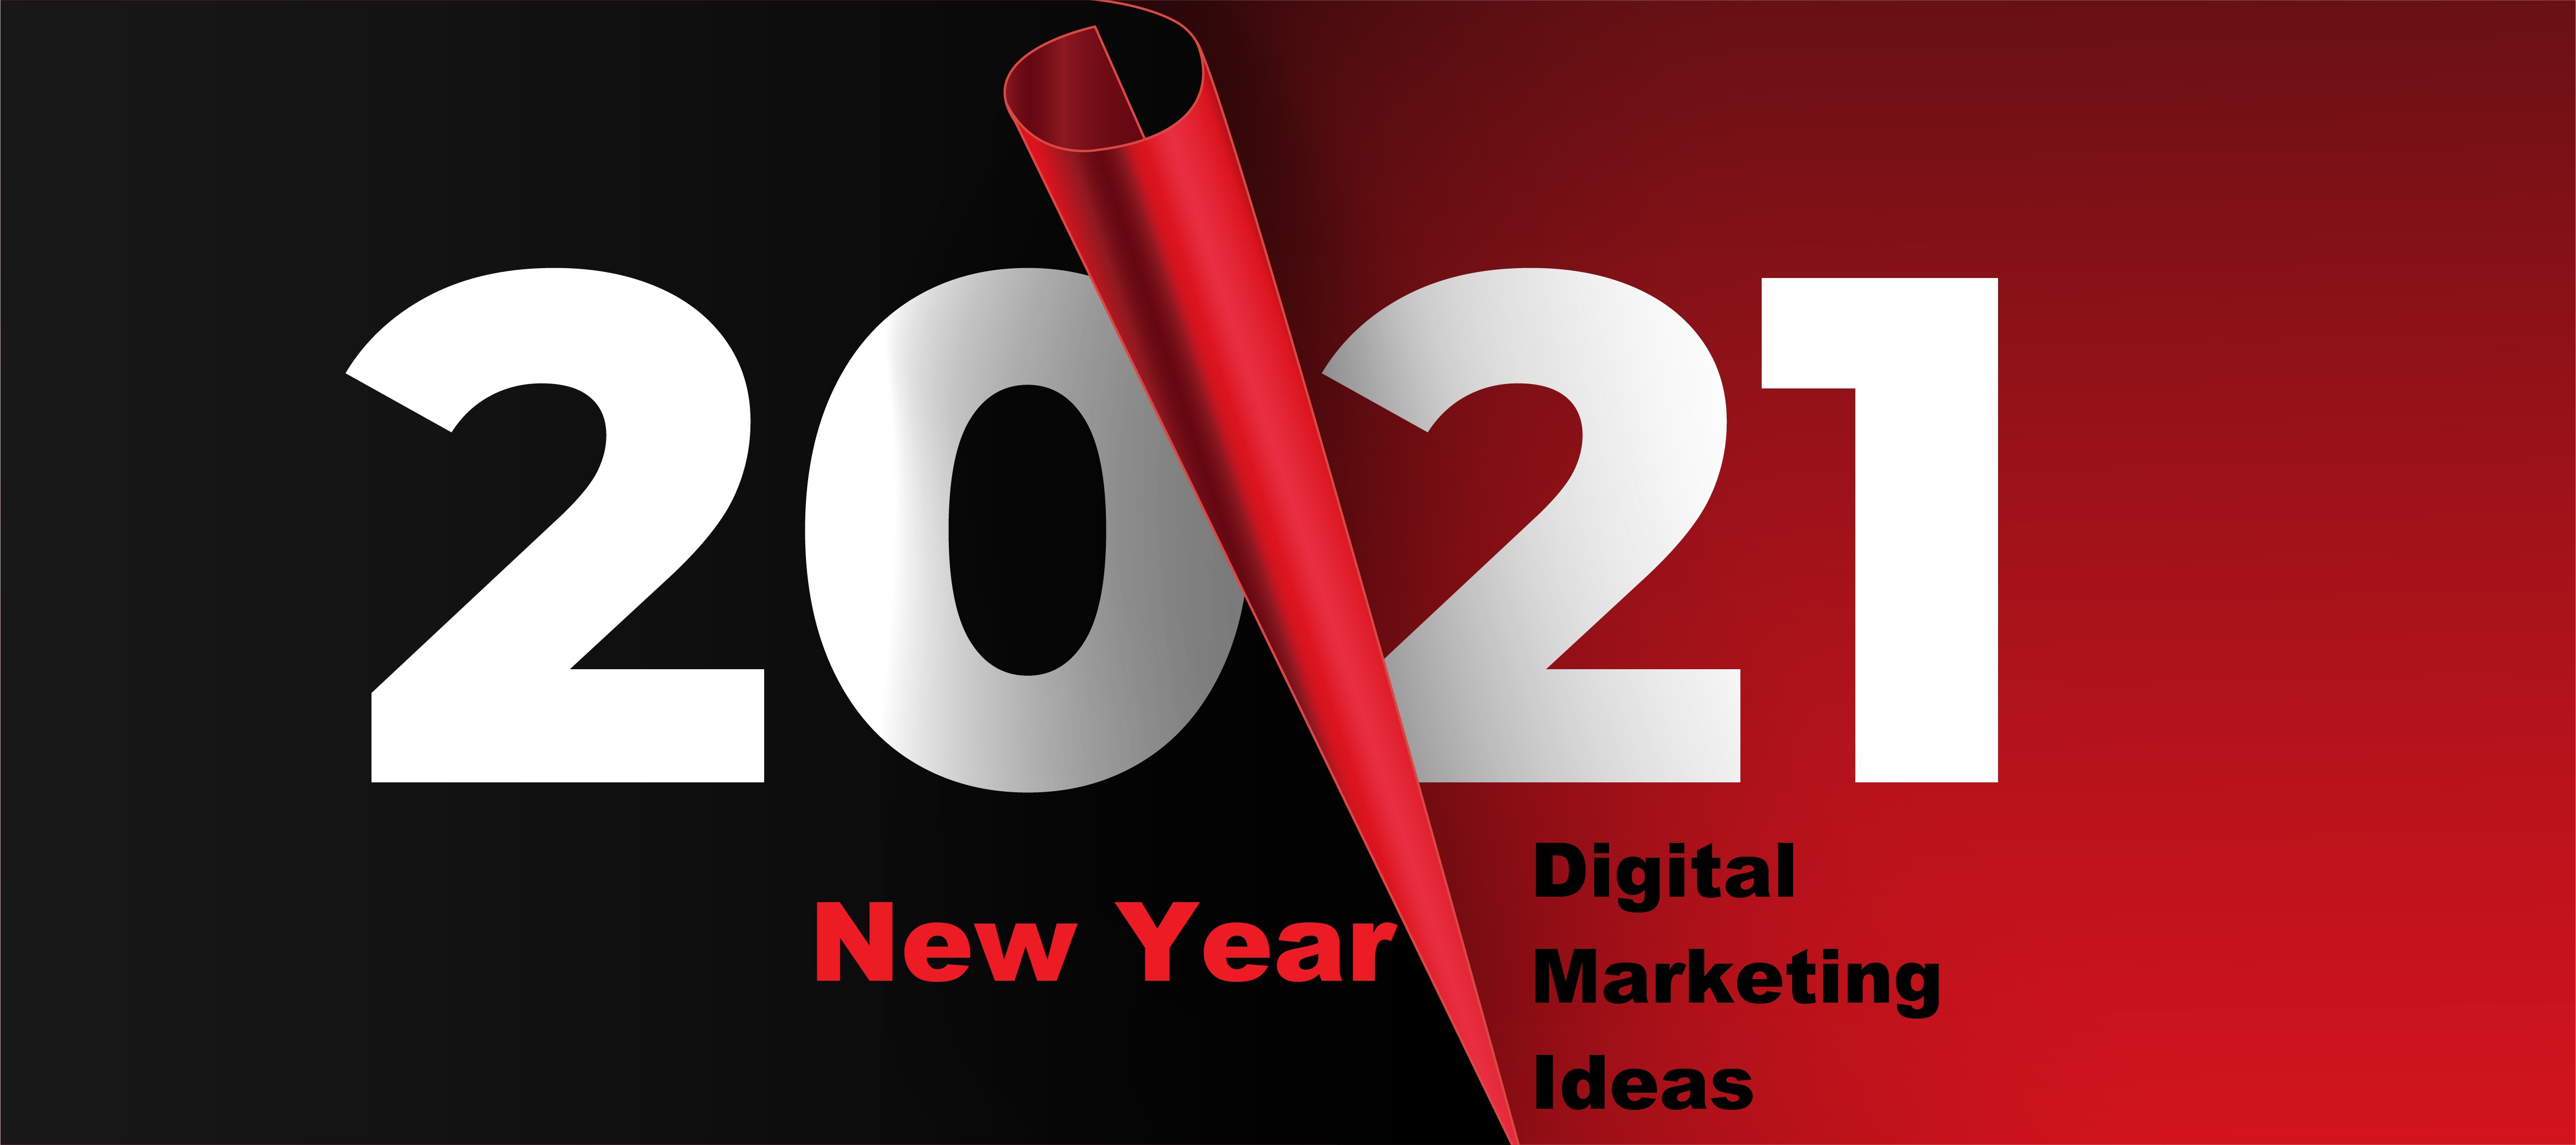 VNS digital marketing ideas 2021